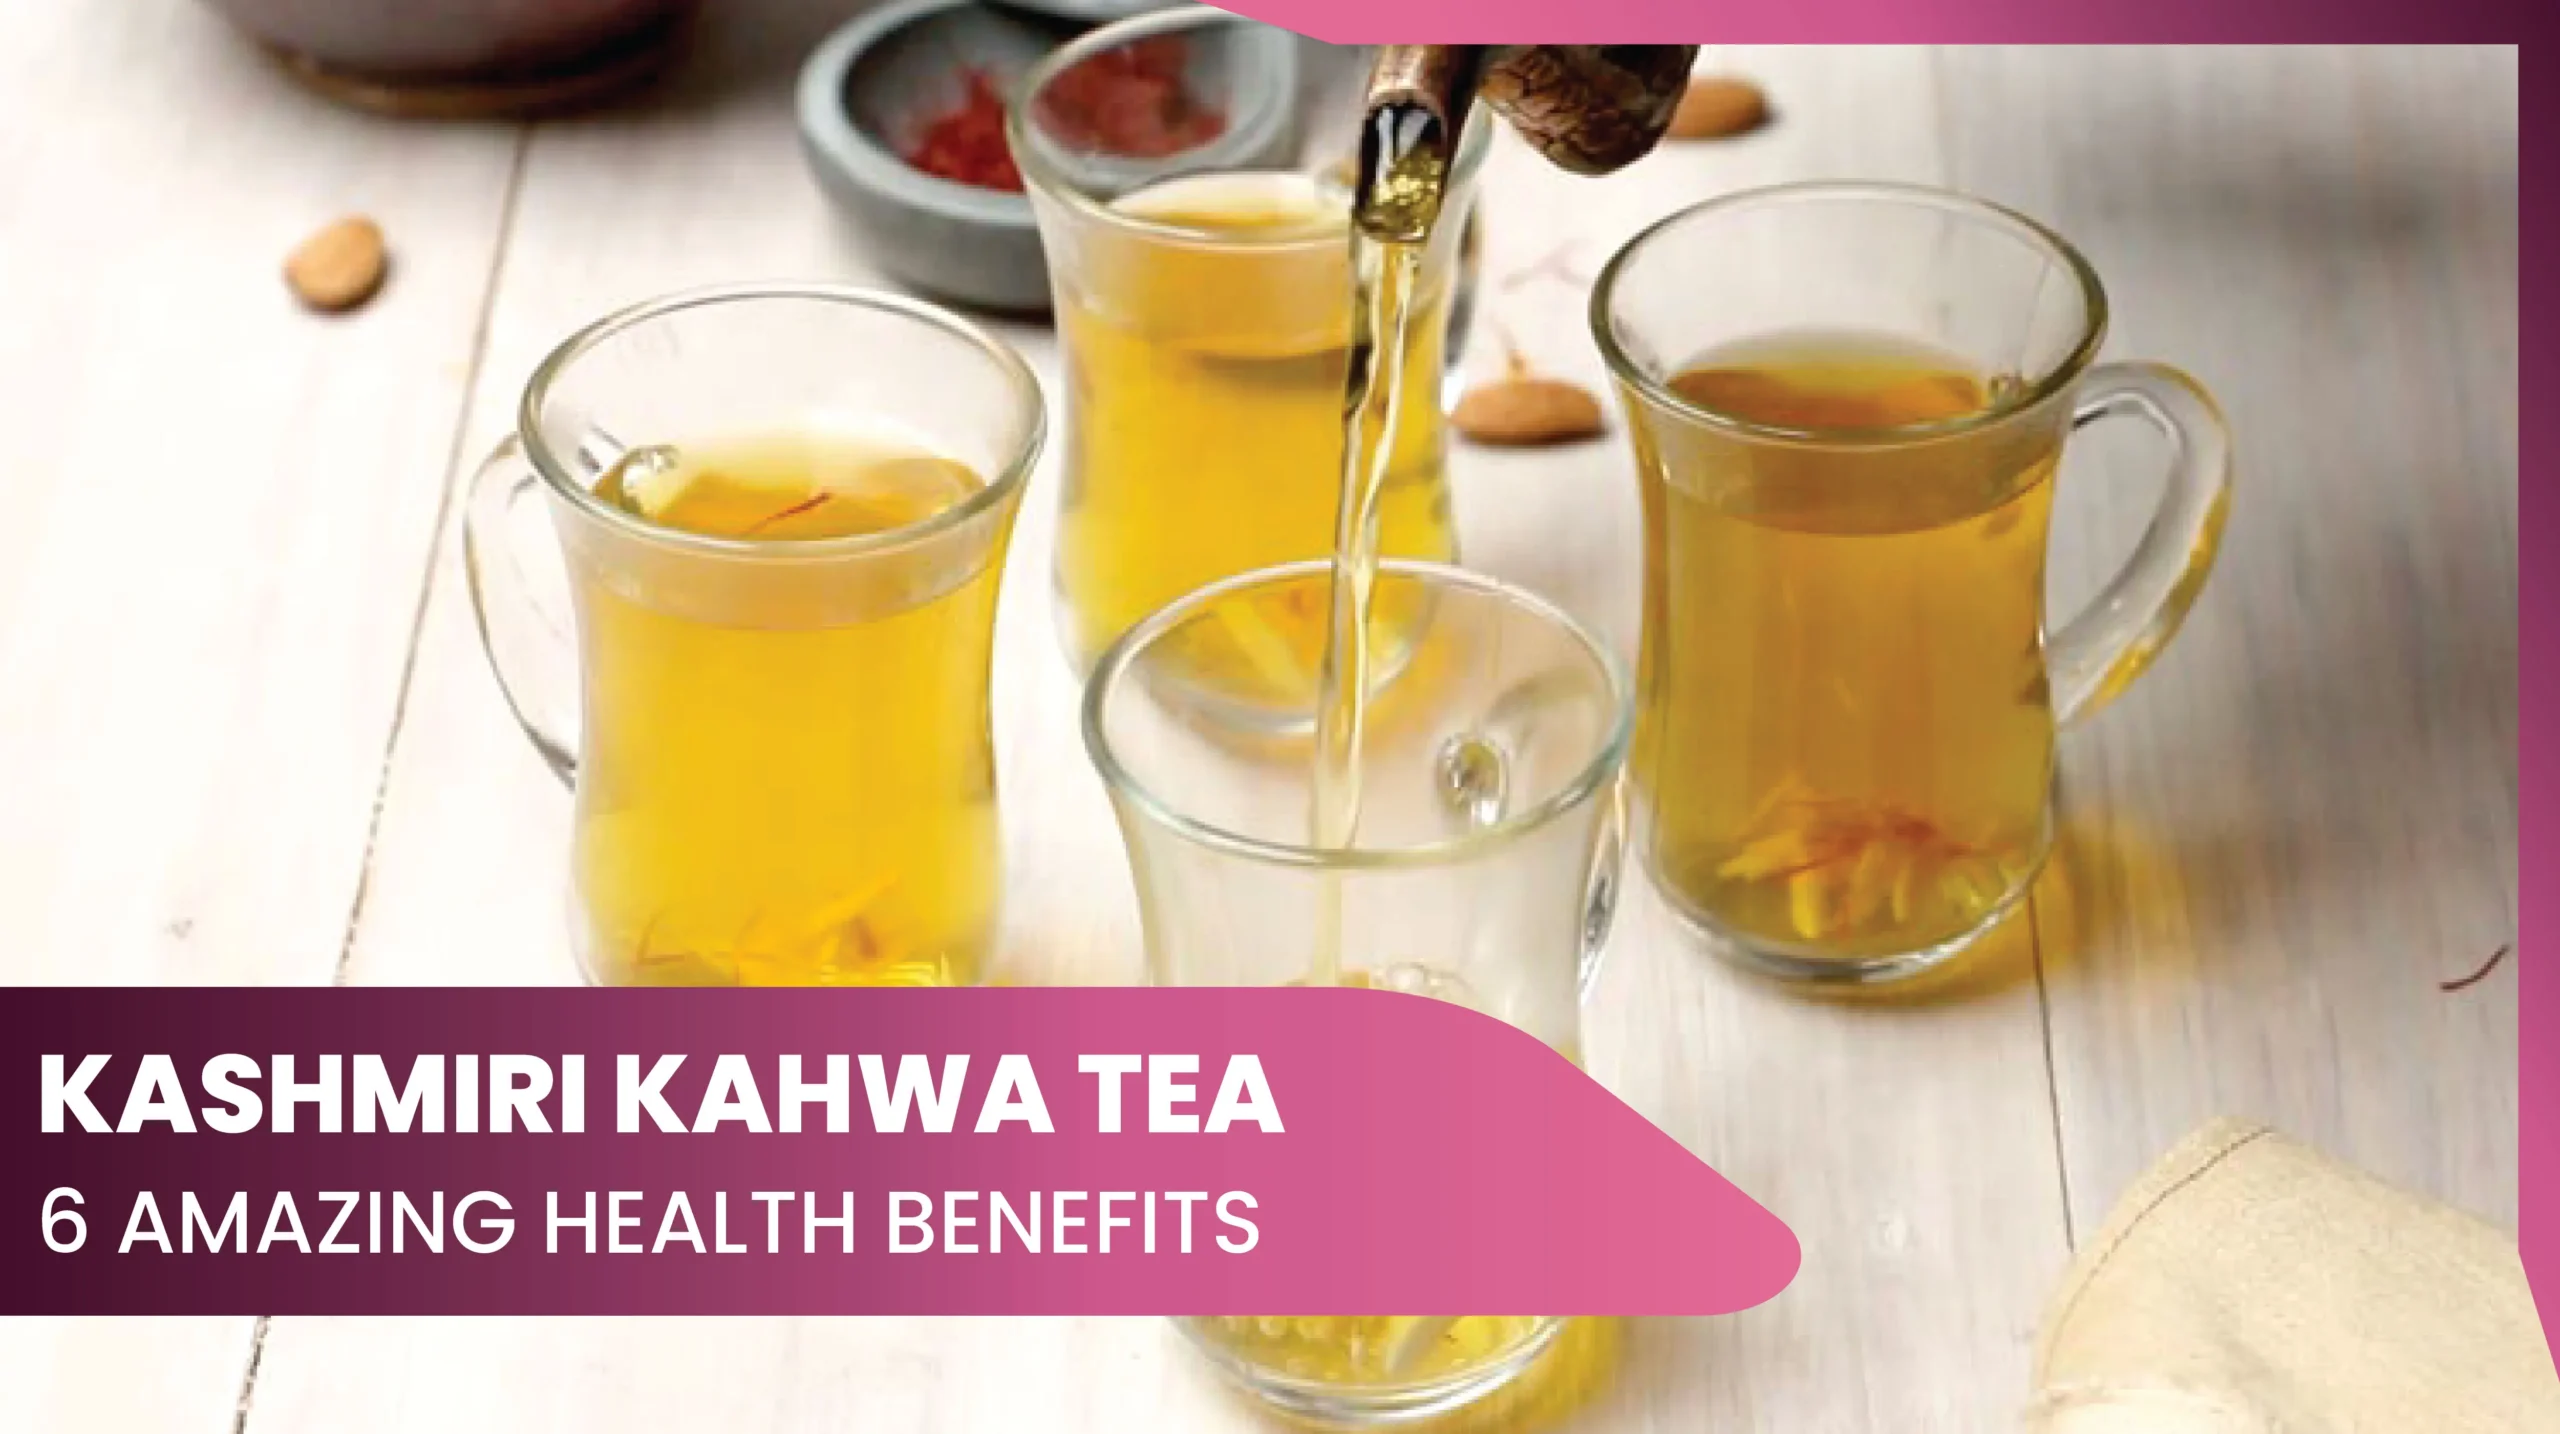 11Recipe of Kashmiri Kahwa Tea and Health Benefits